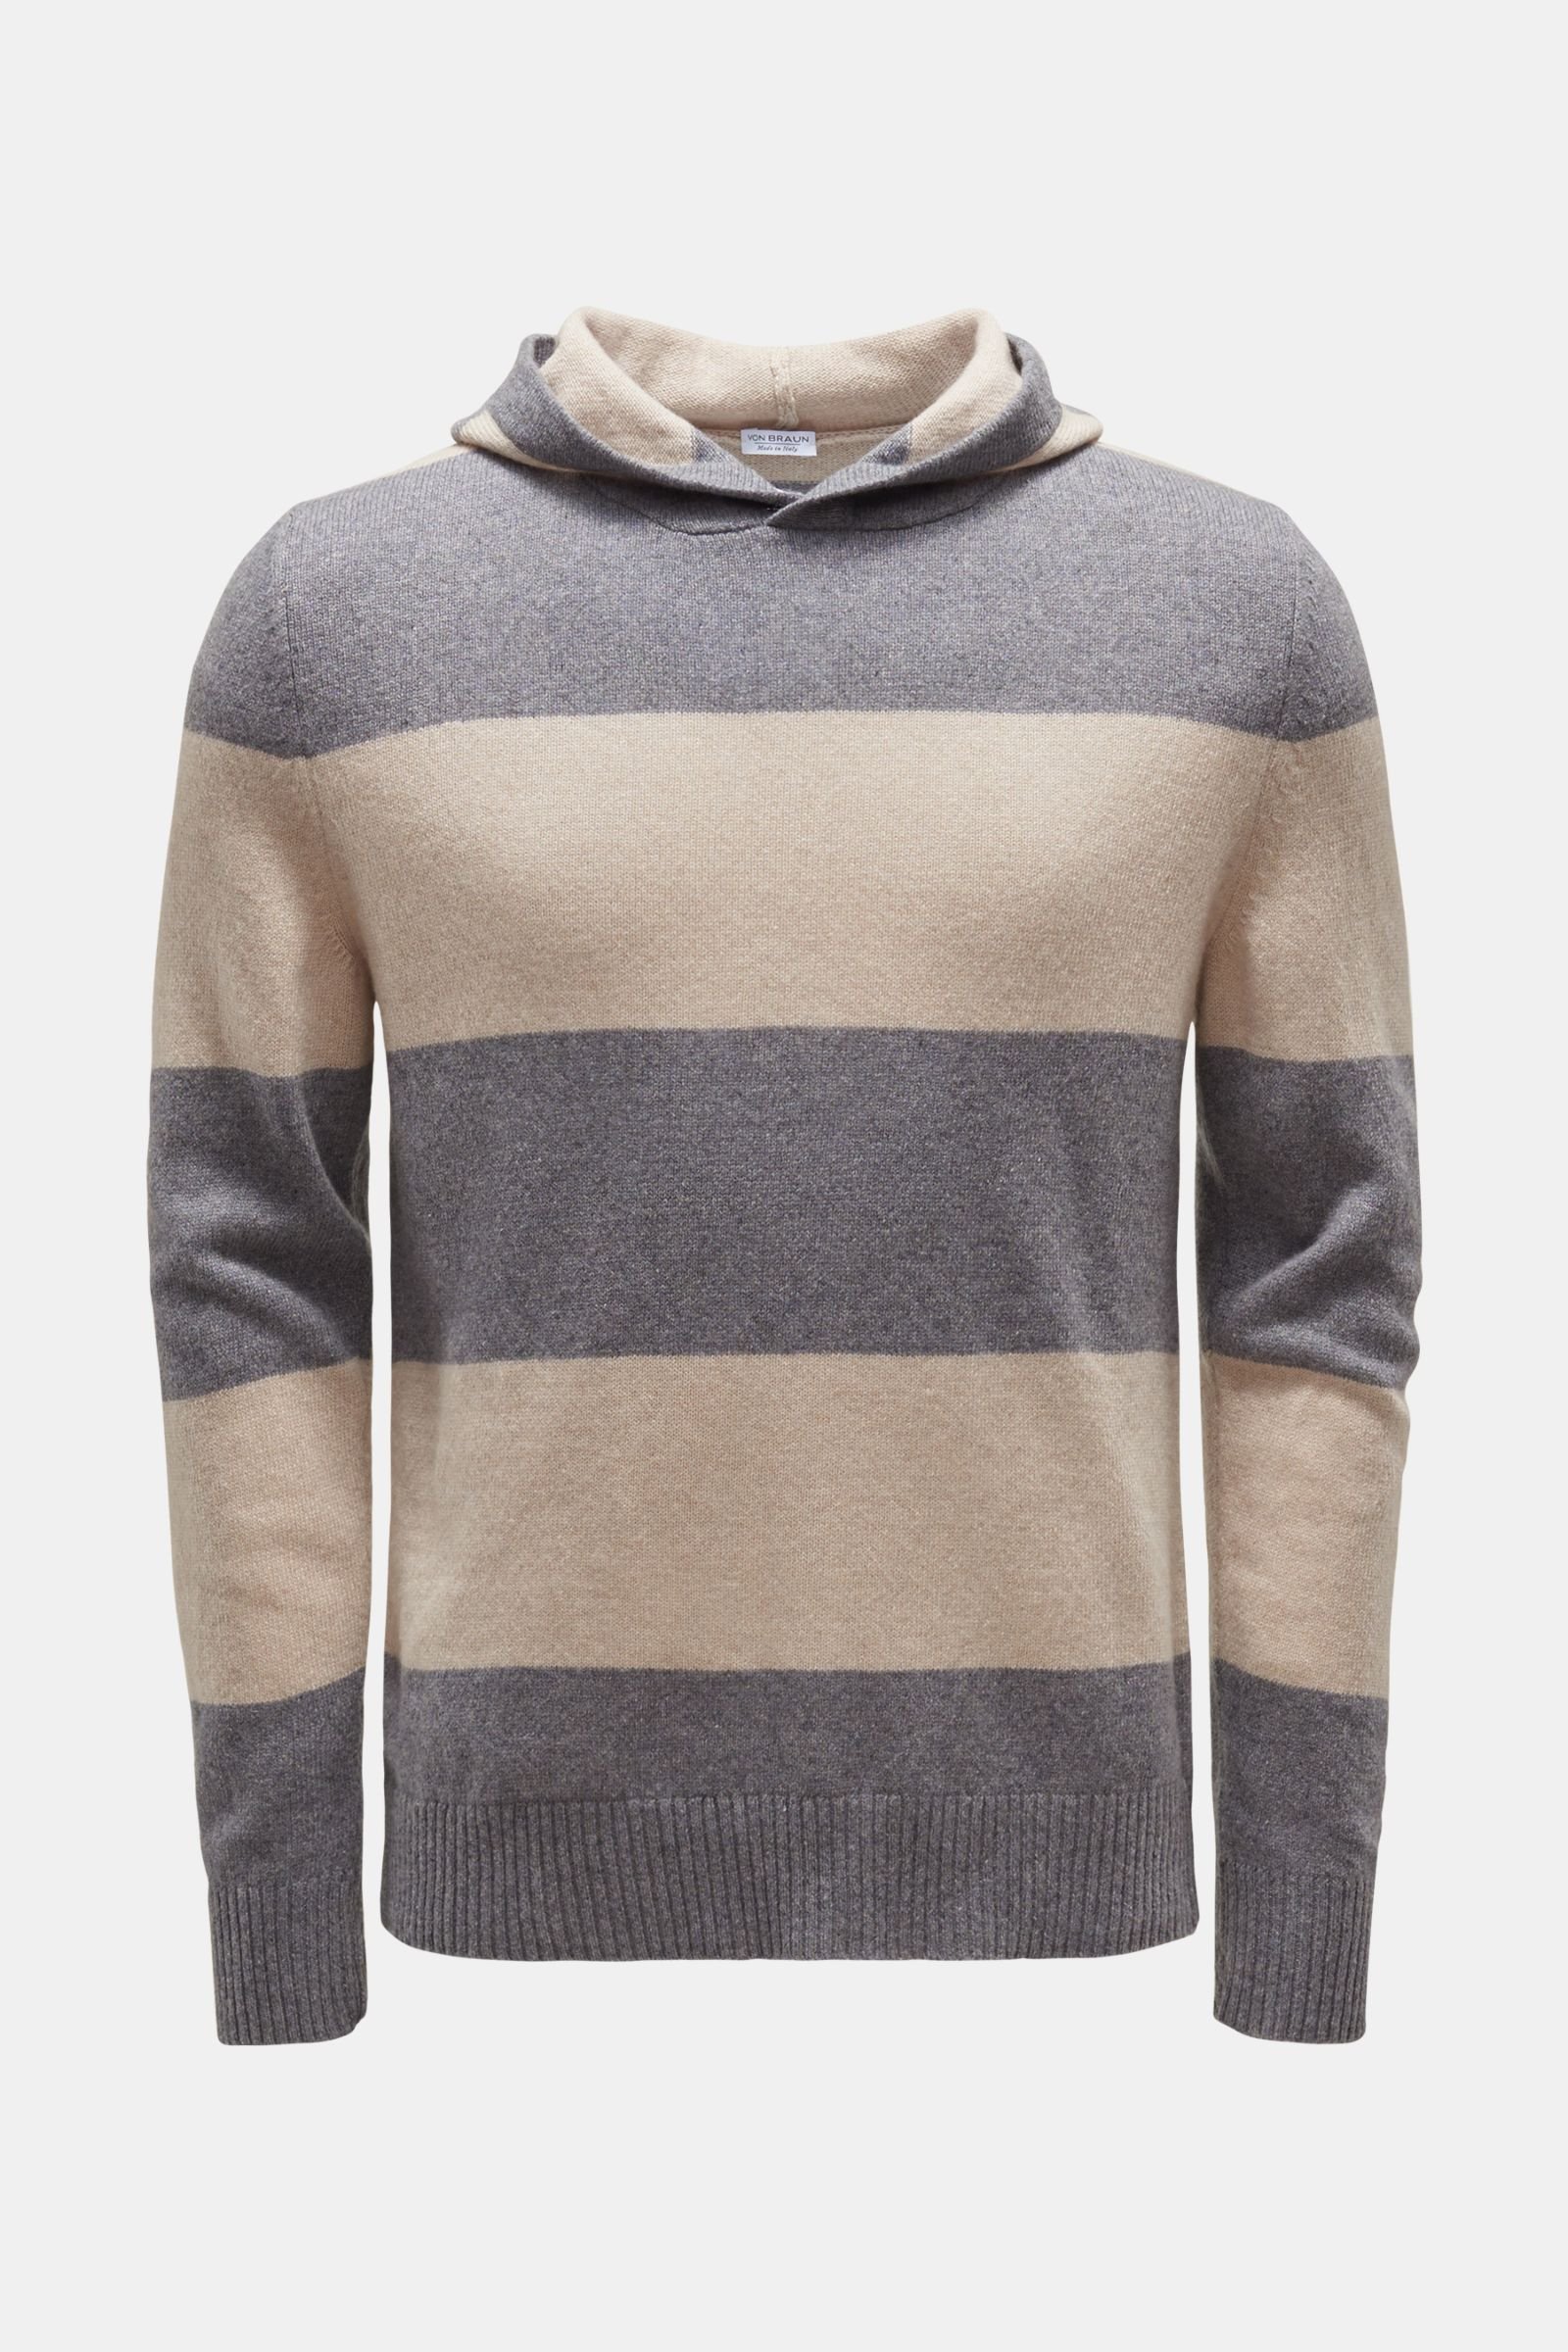 Cashmere hooded jumper grey/beige striped